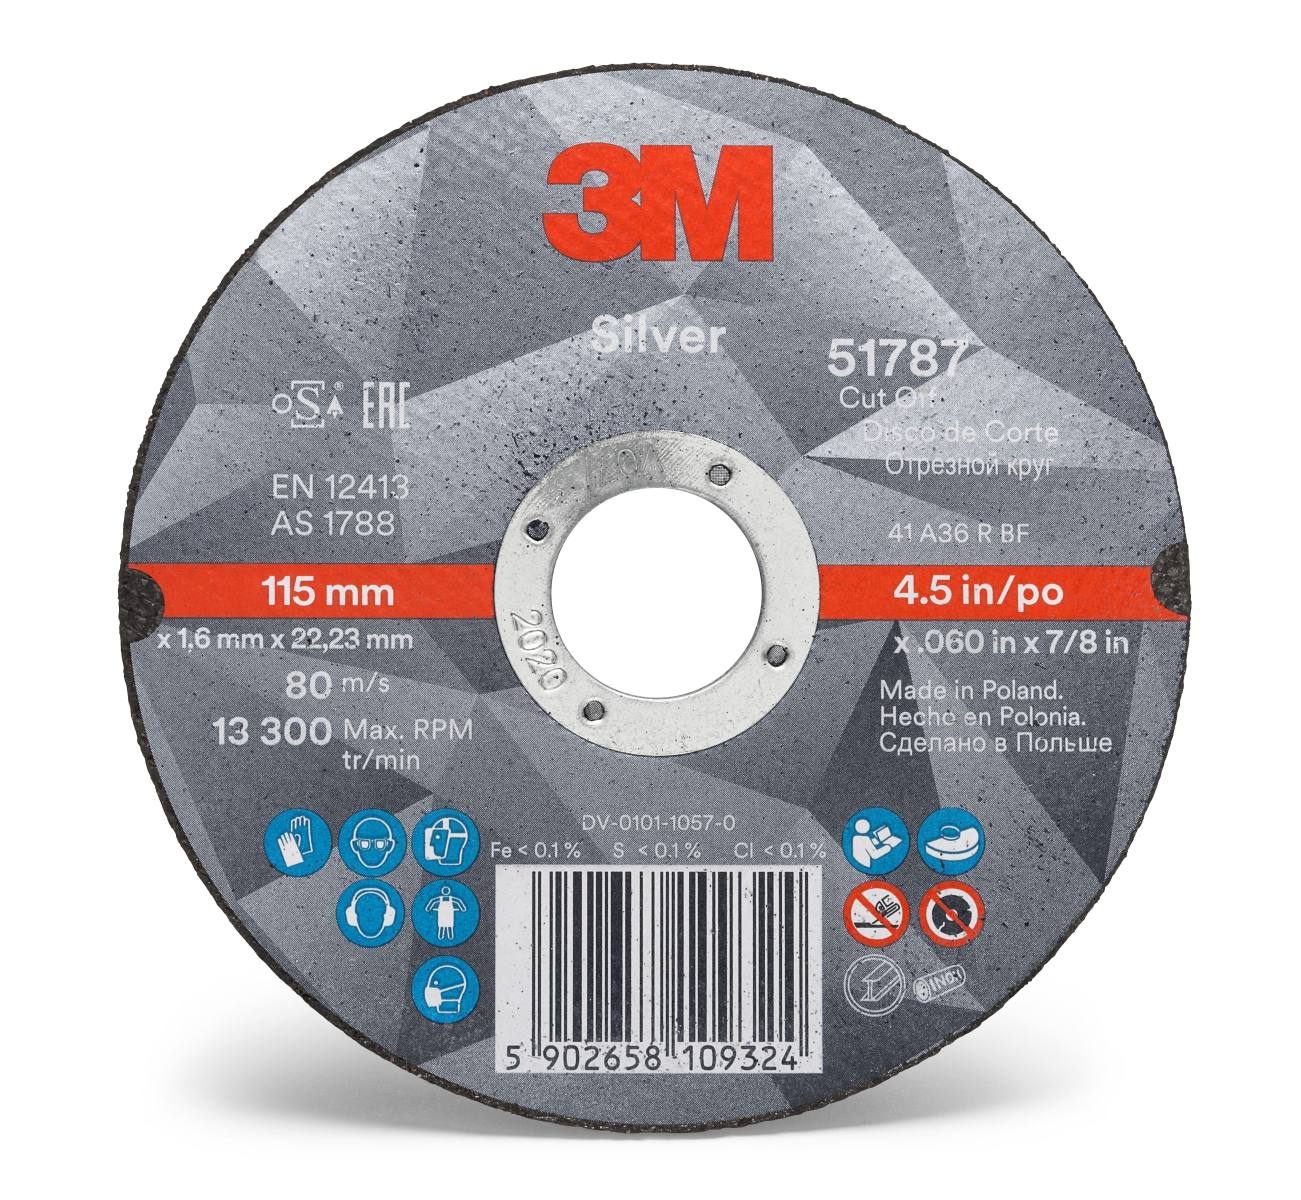 3M Silver Cut-Off Wheel Trennscheibe, 115 mm, 2,5 mm, 22,23 mm, T42, 51800